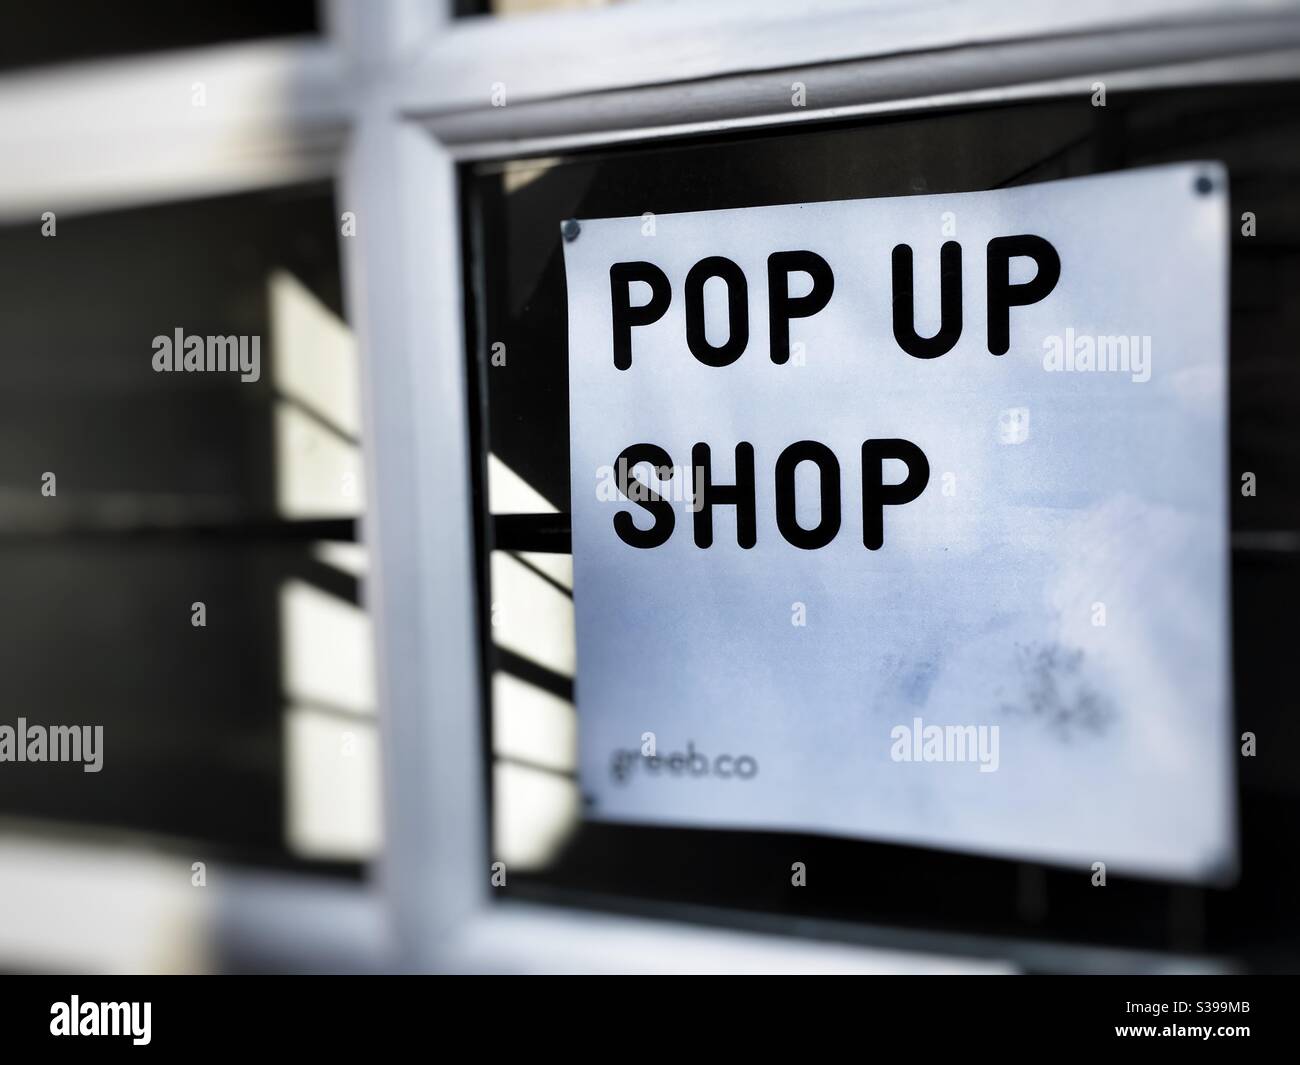 Pop up shop Stock Photo